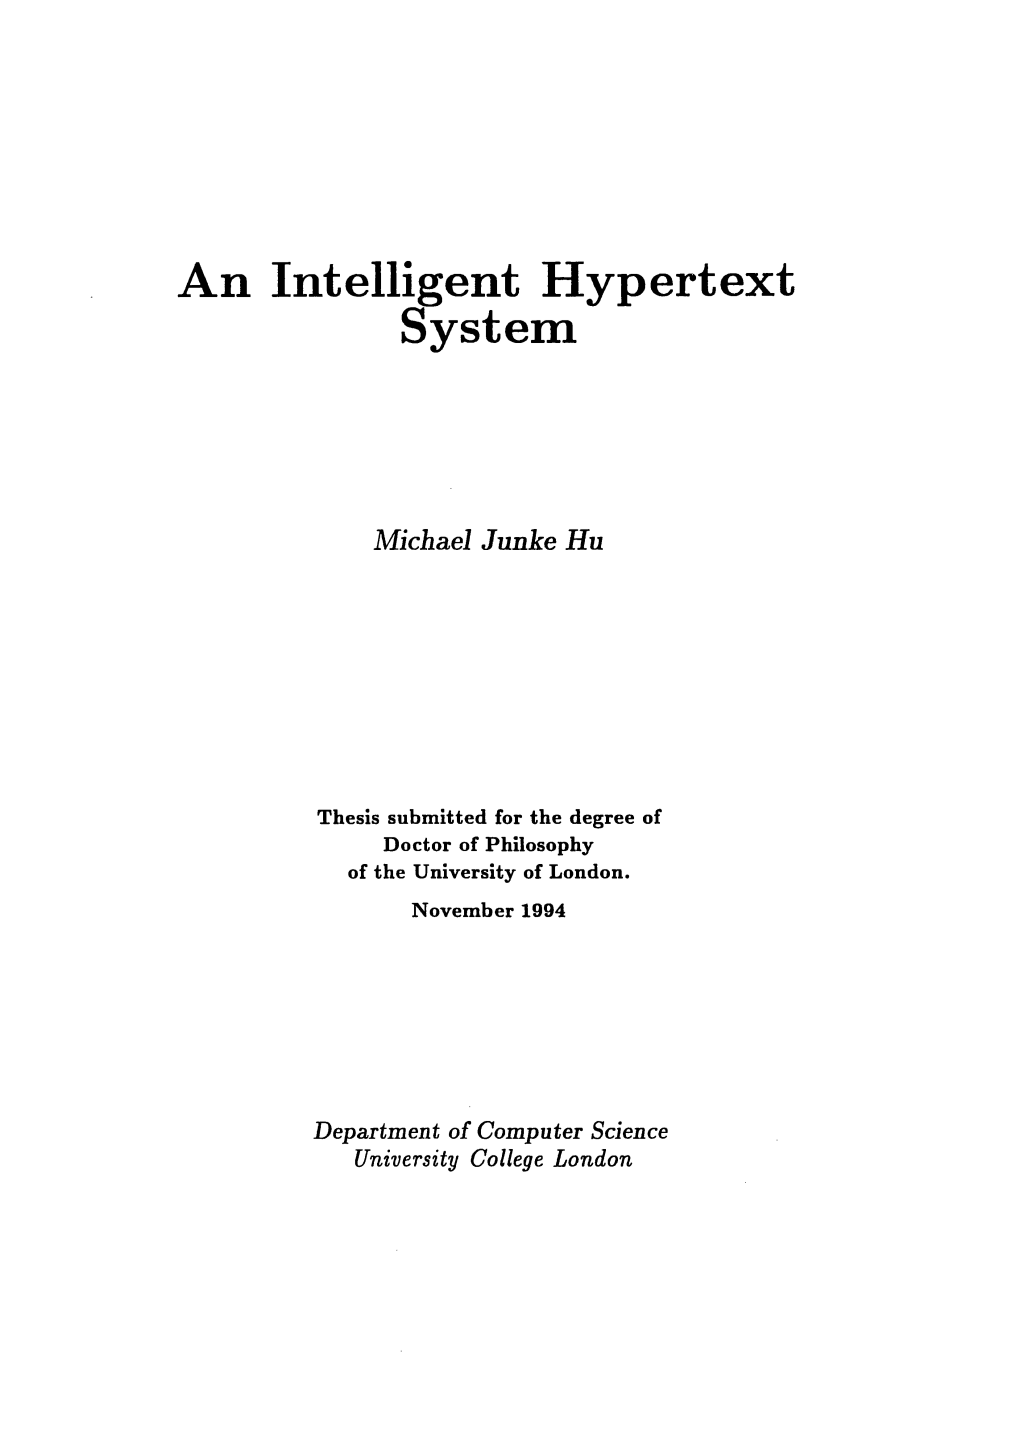 An Intelligent Hypertext System